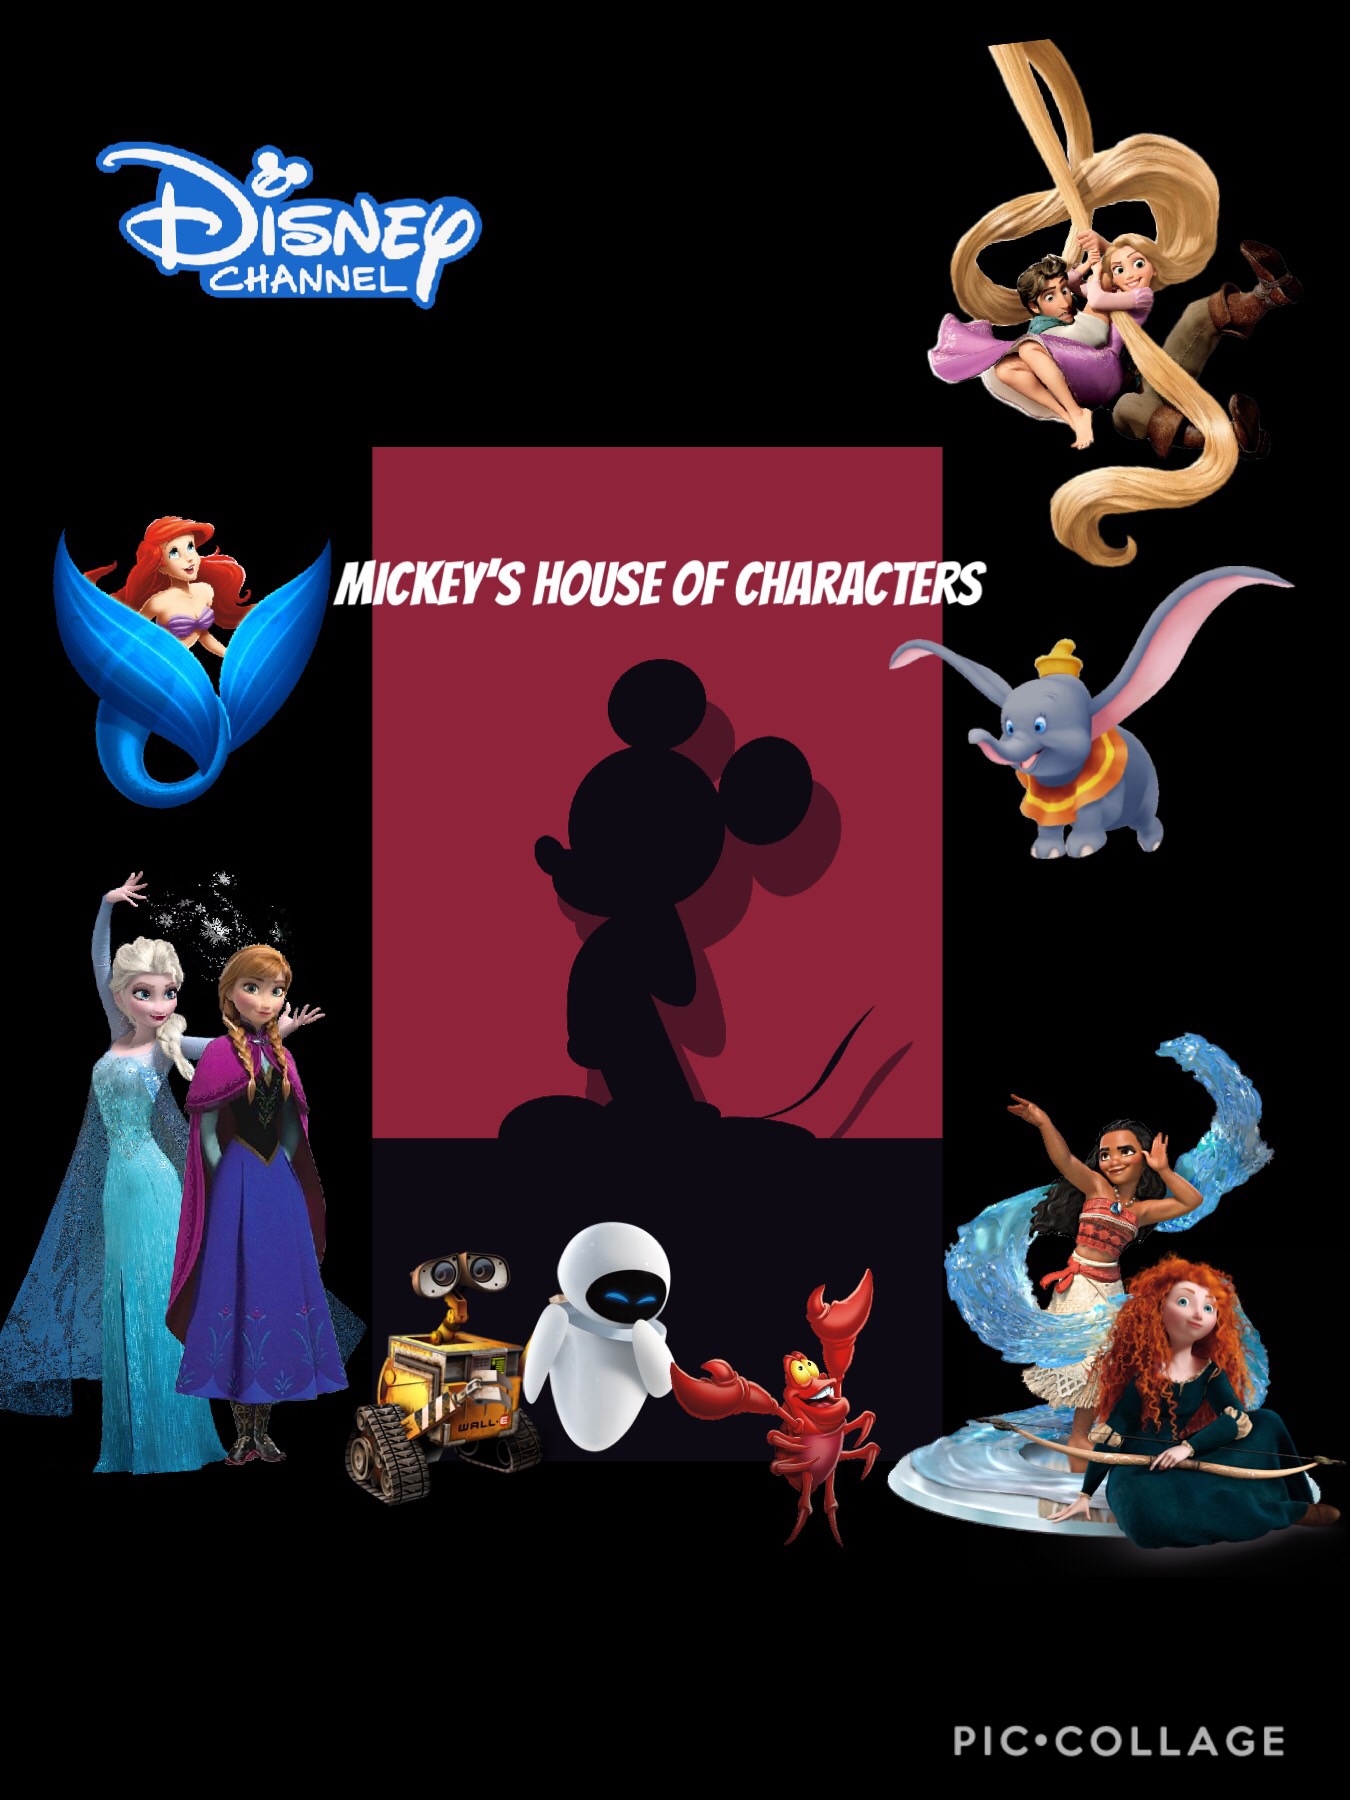 Mickey Mouse (TV series), Disney Fanon Wiki